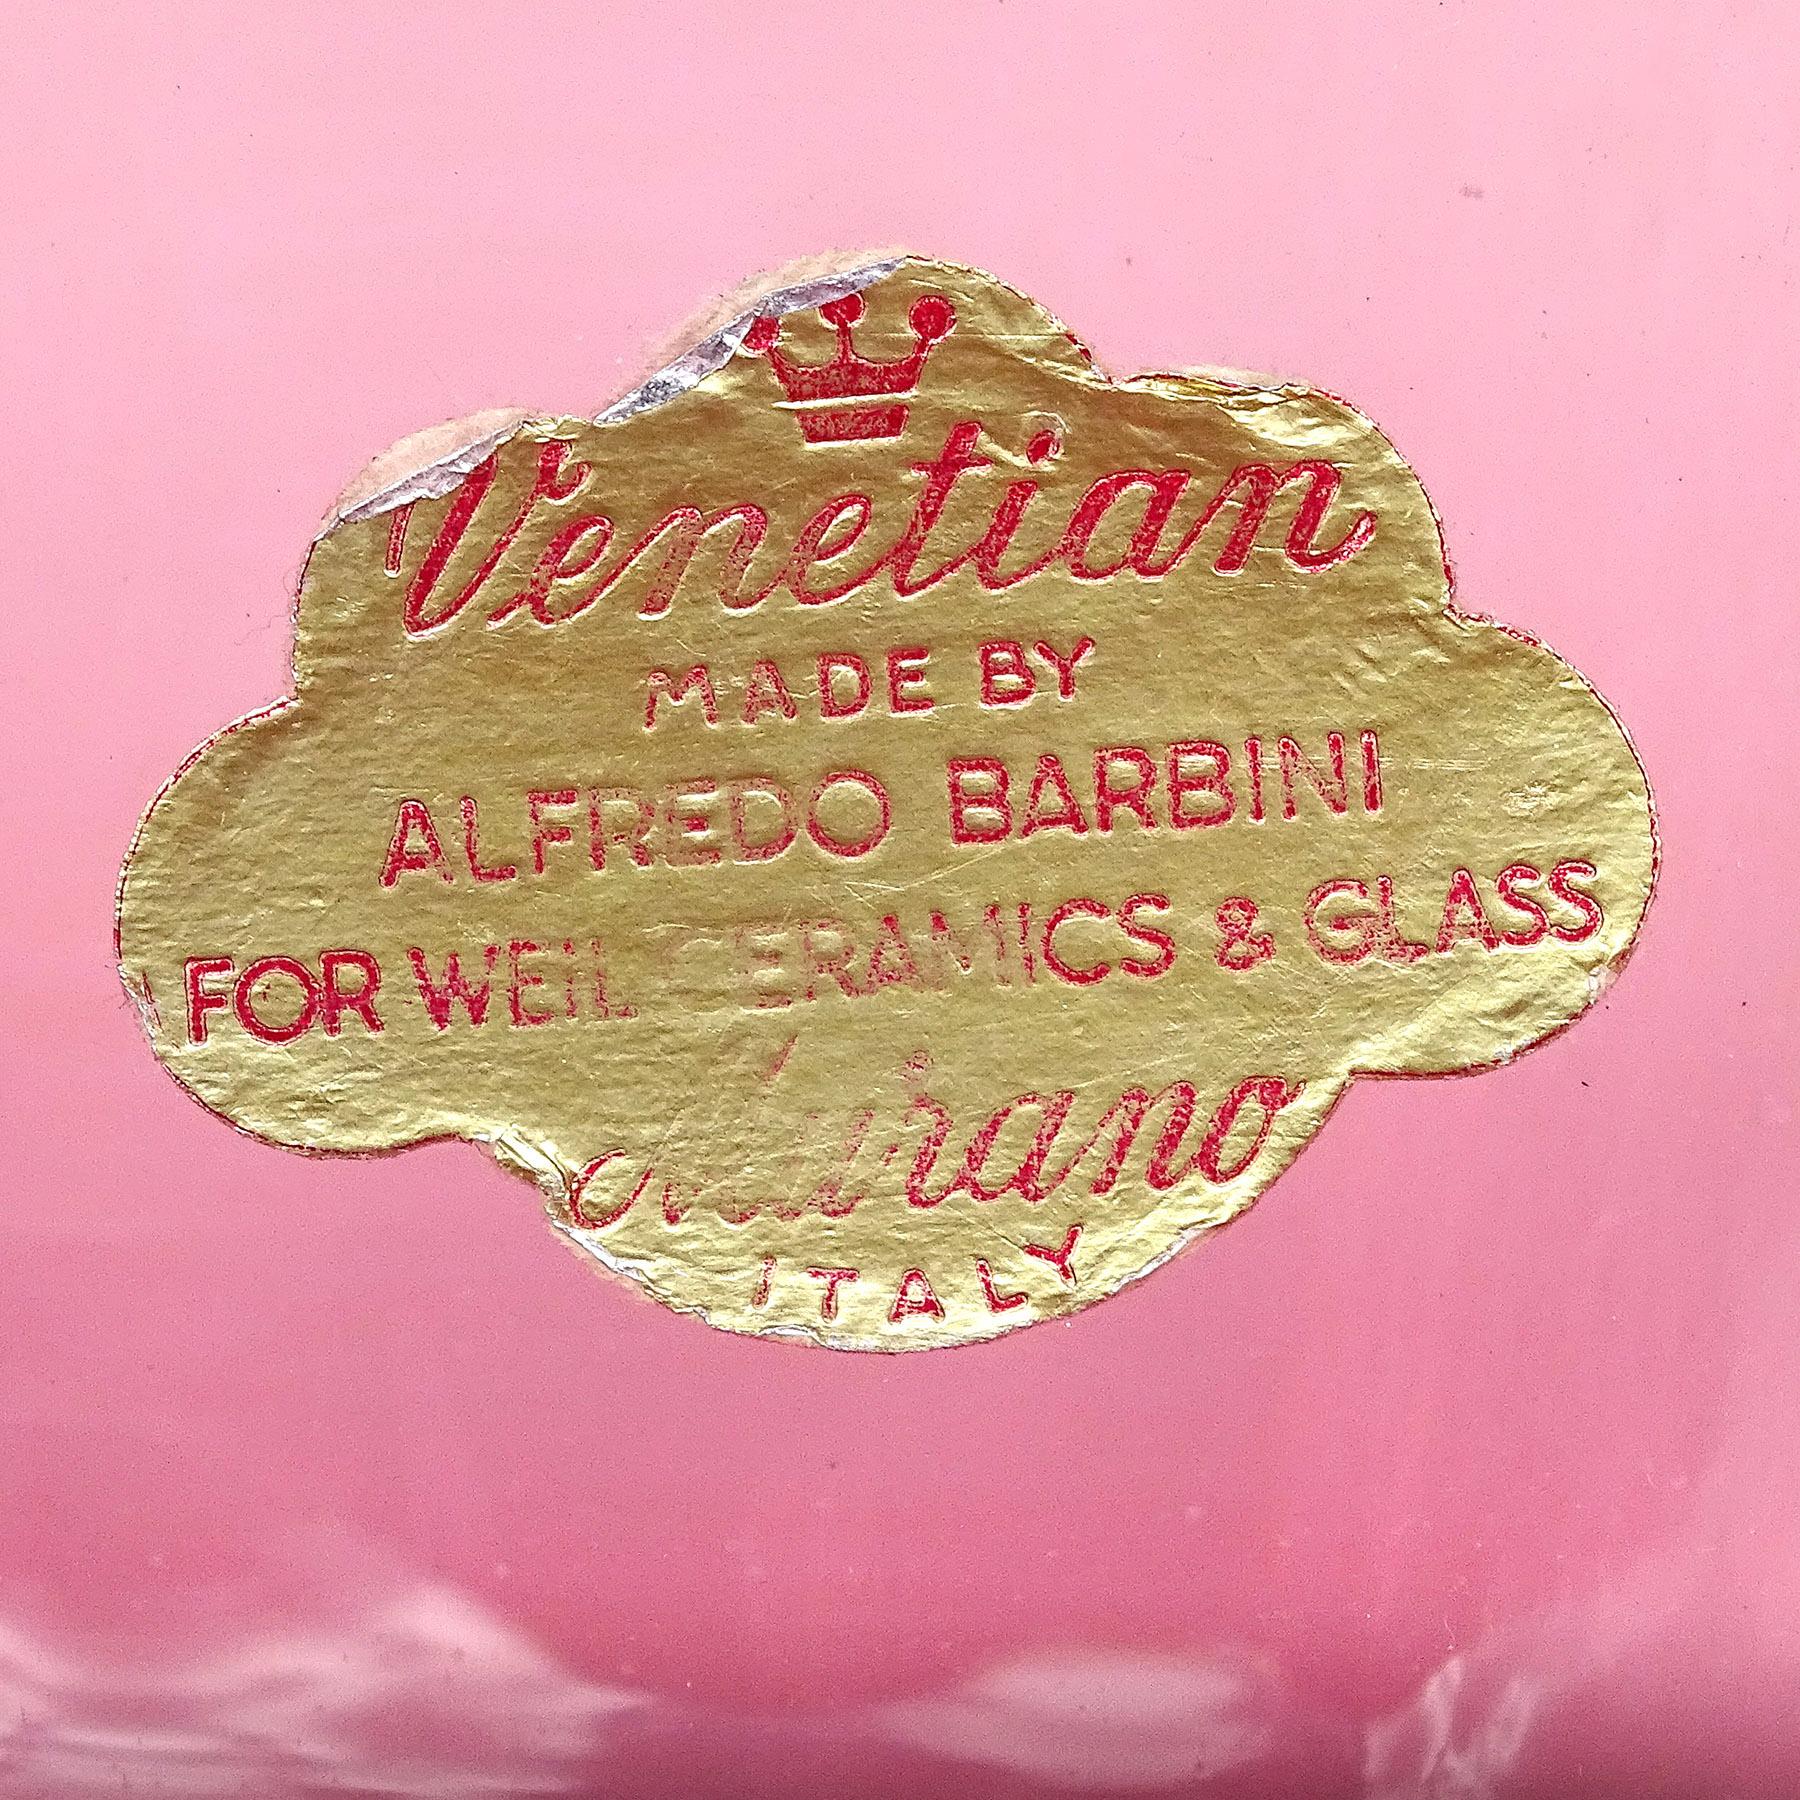 Mid-Century Modern Alfredo Barbini Murano Sommerso Pink Italian Art Glass Fruit Bowl Centerpiece For Sale